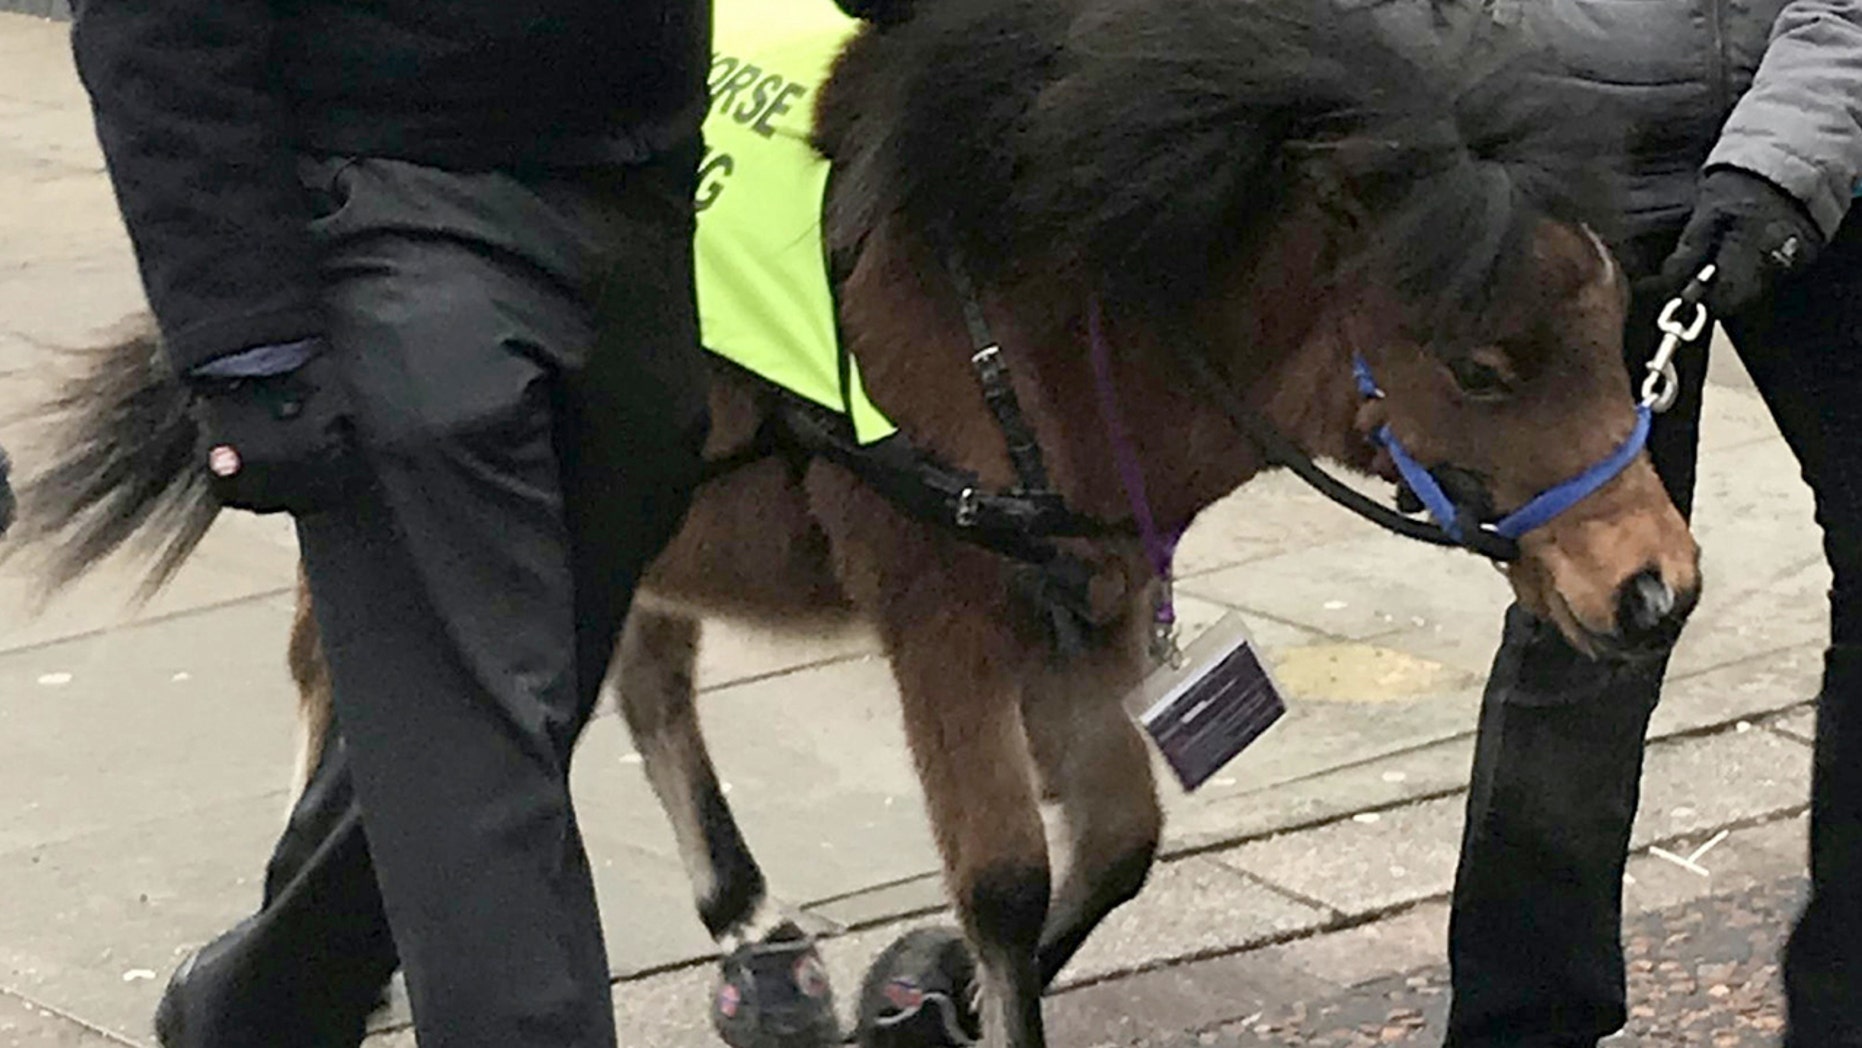 Horse S Chut Chudai Sexy Videos - Blind man afraid of dogs gets miniature guide horse instead | Fox News